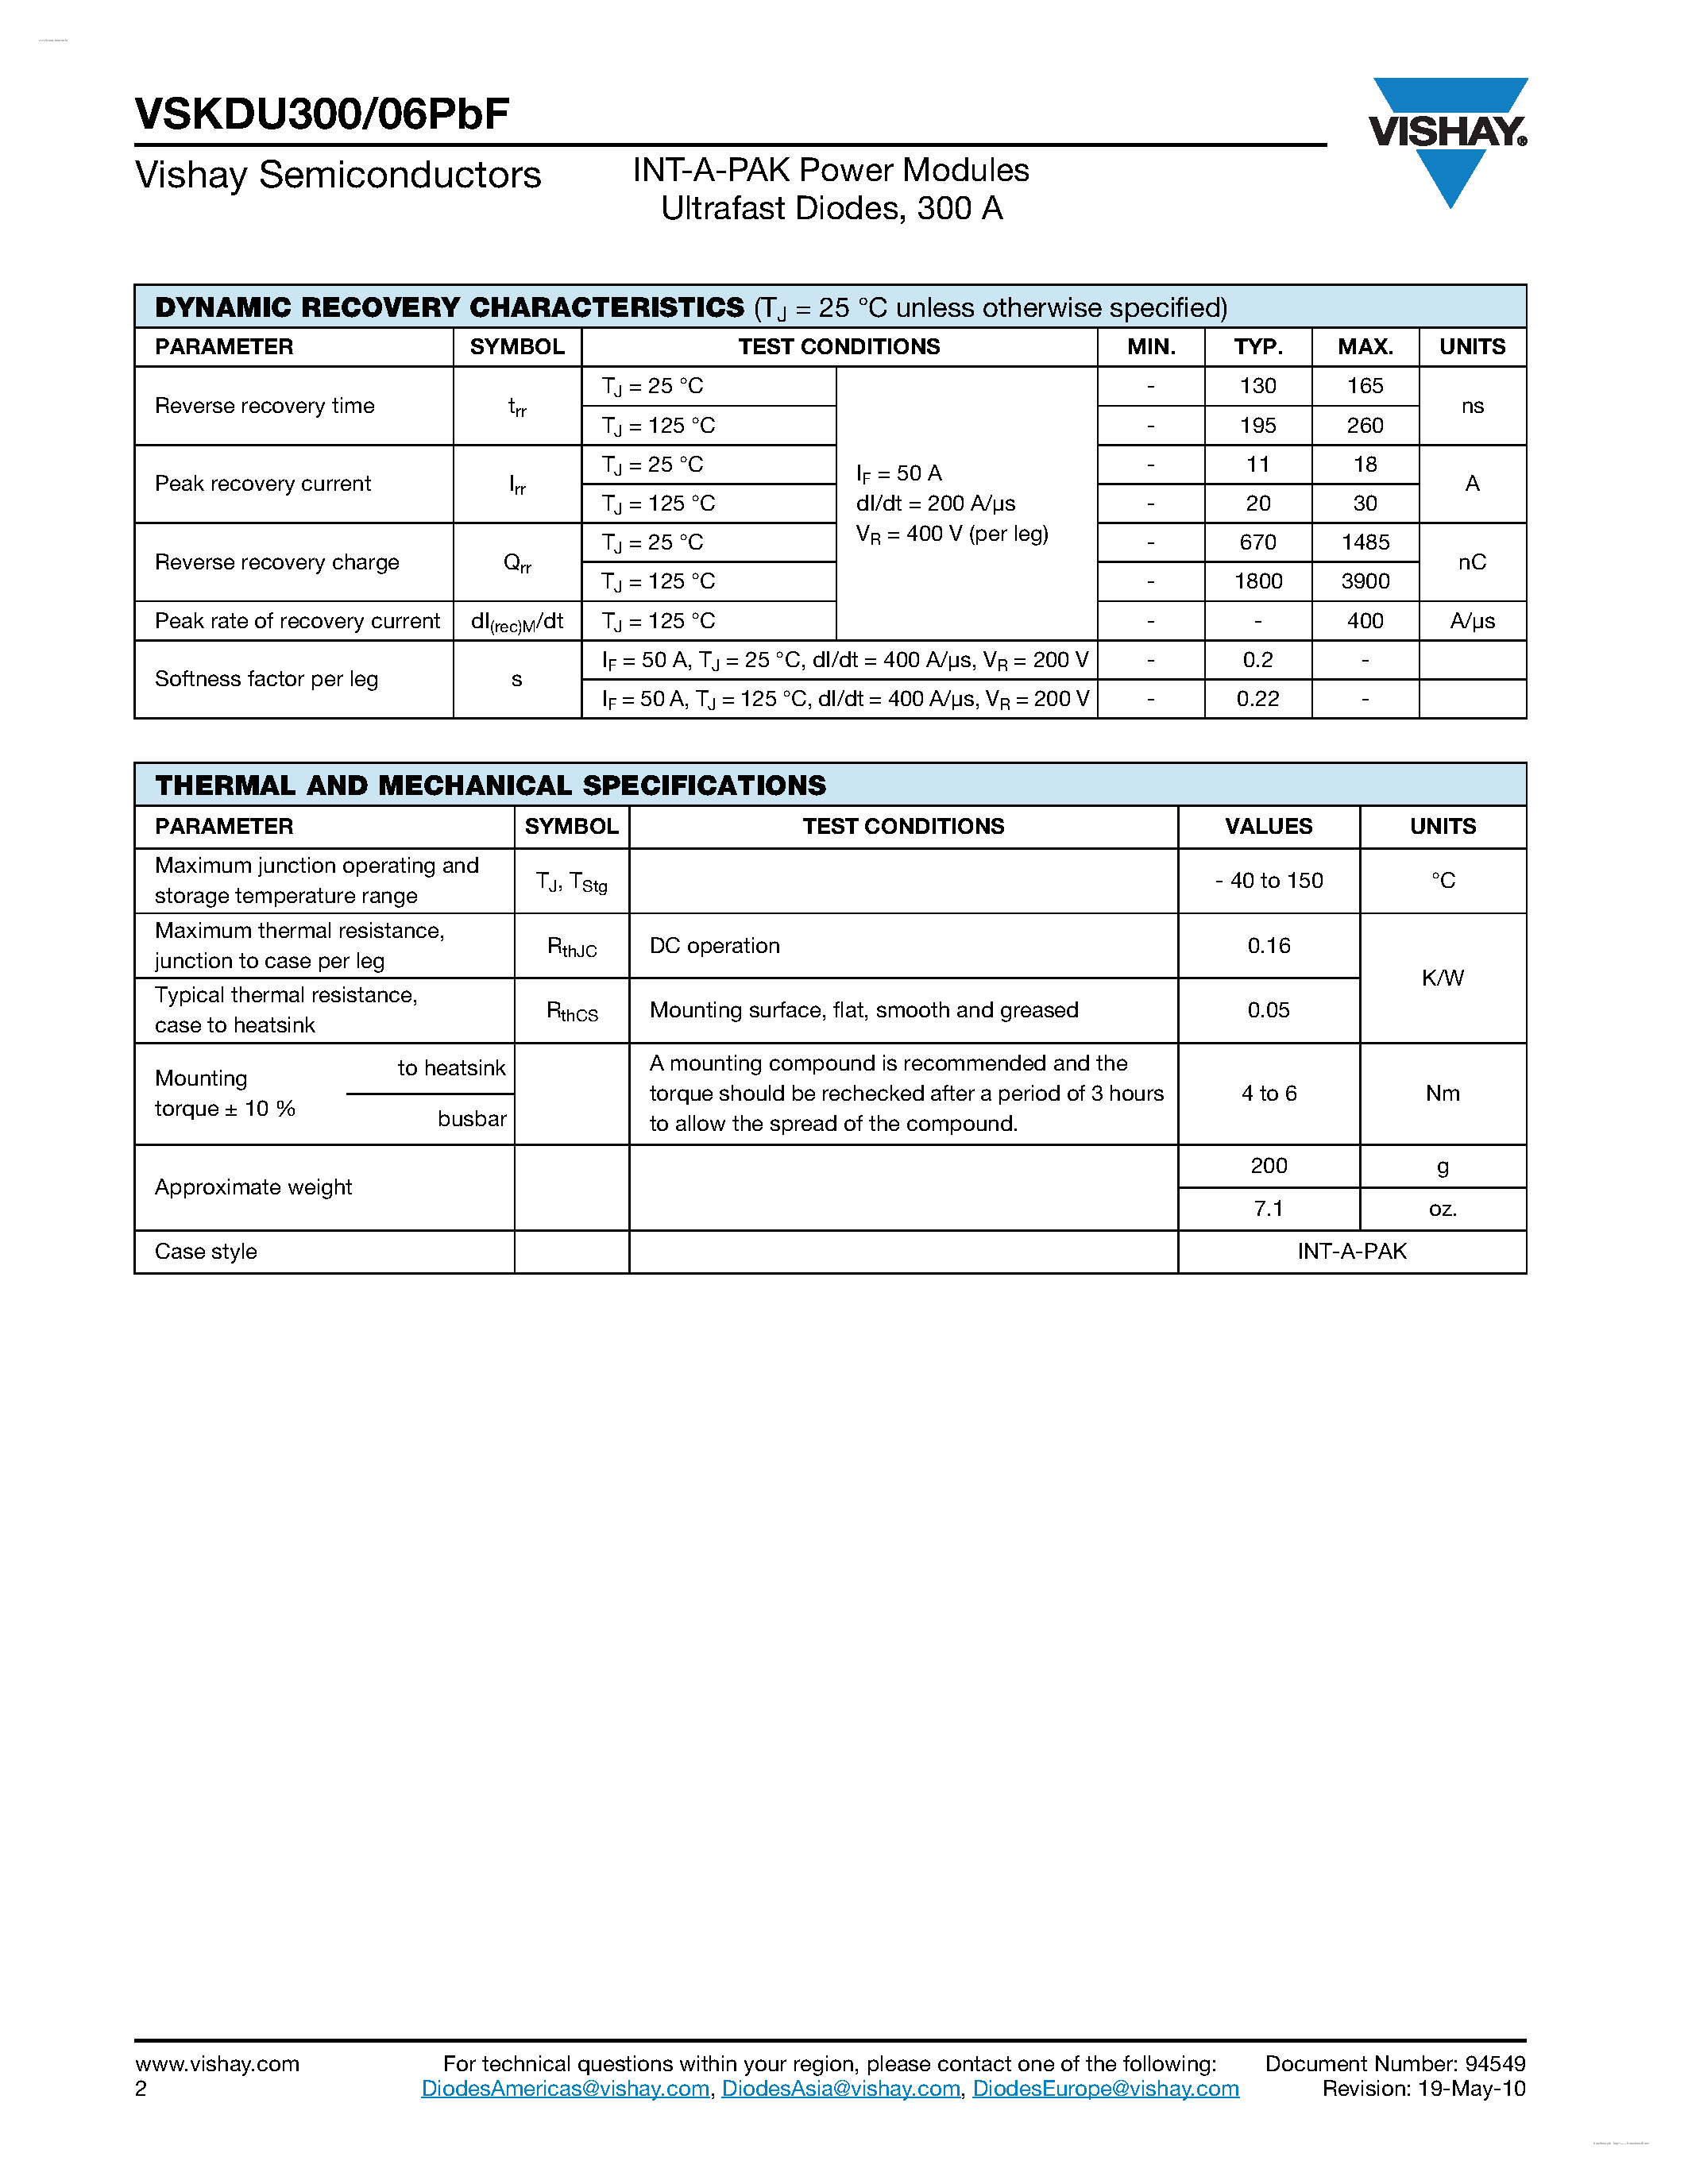 Datasheet VSKDU300/06PBF - INT-A-PAK Power Modules Ultrafast Diodes page 2